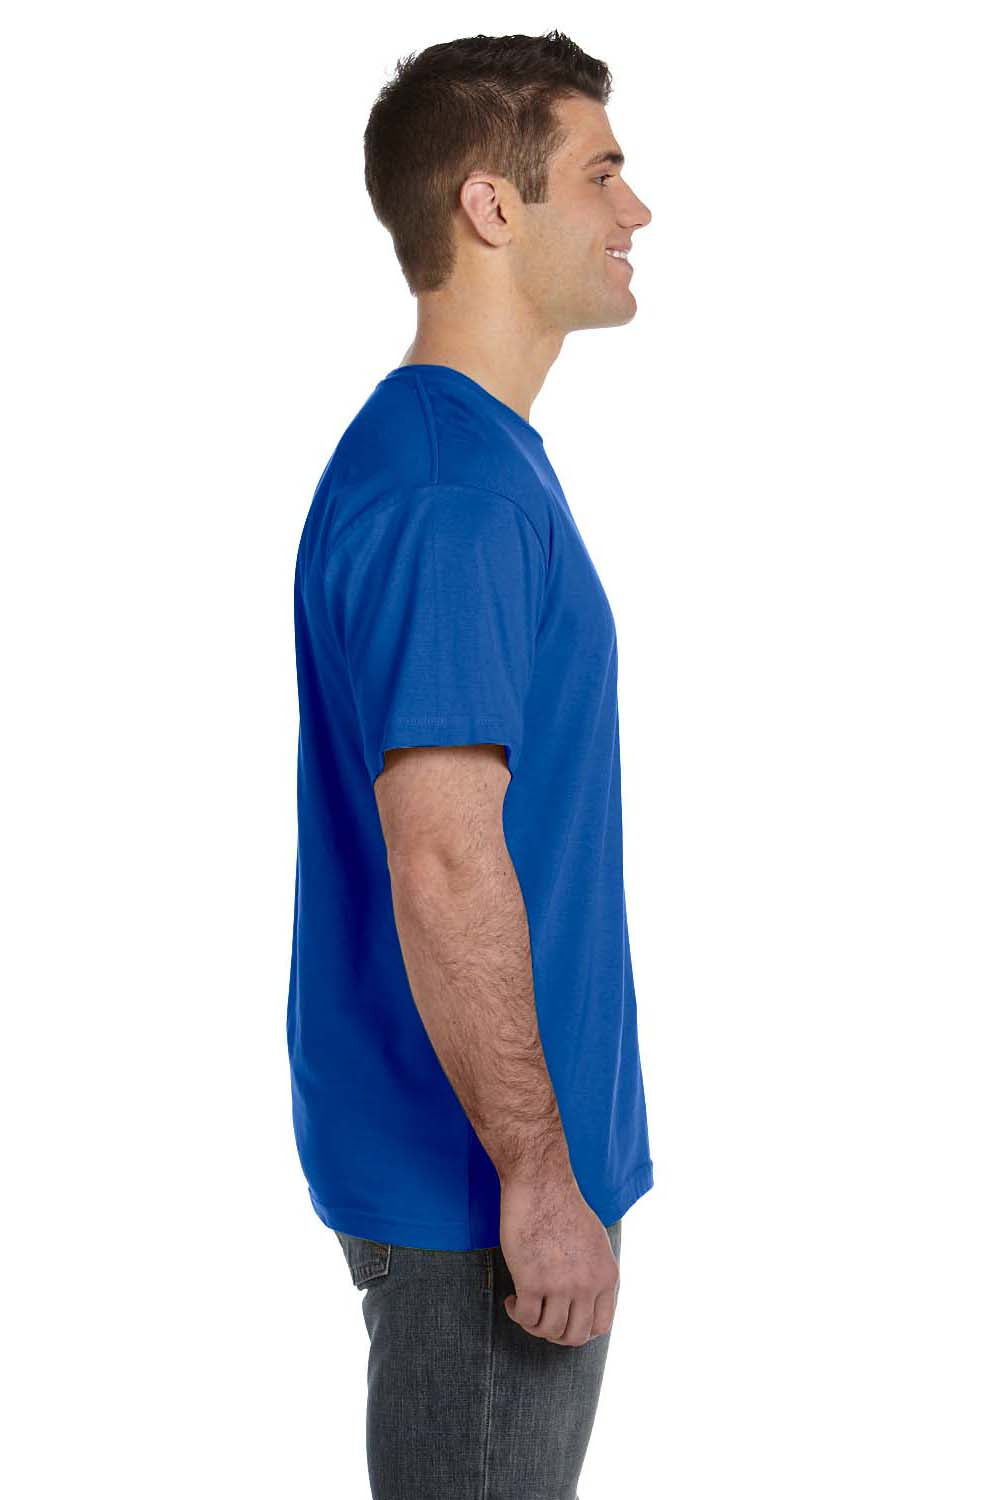 LAT 6901 Mens Fine Jersey Short Sleeve Crewneck T-Shirt Royal Blue Side